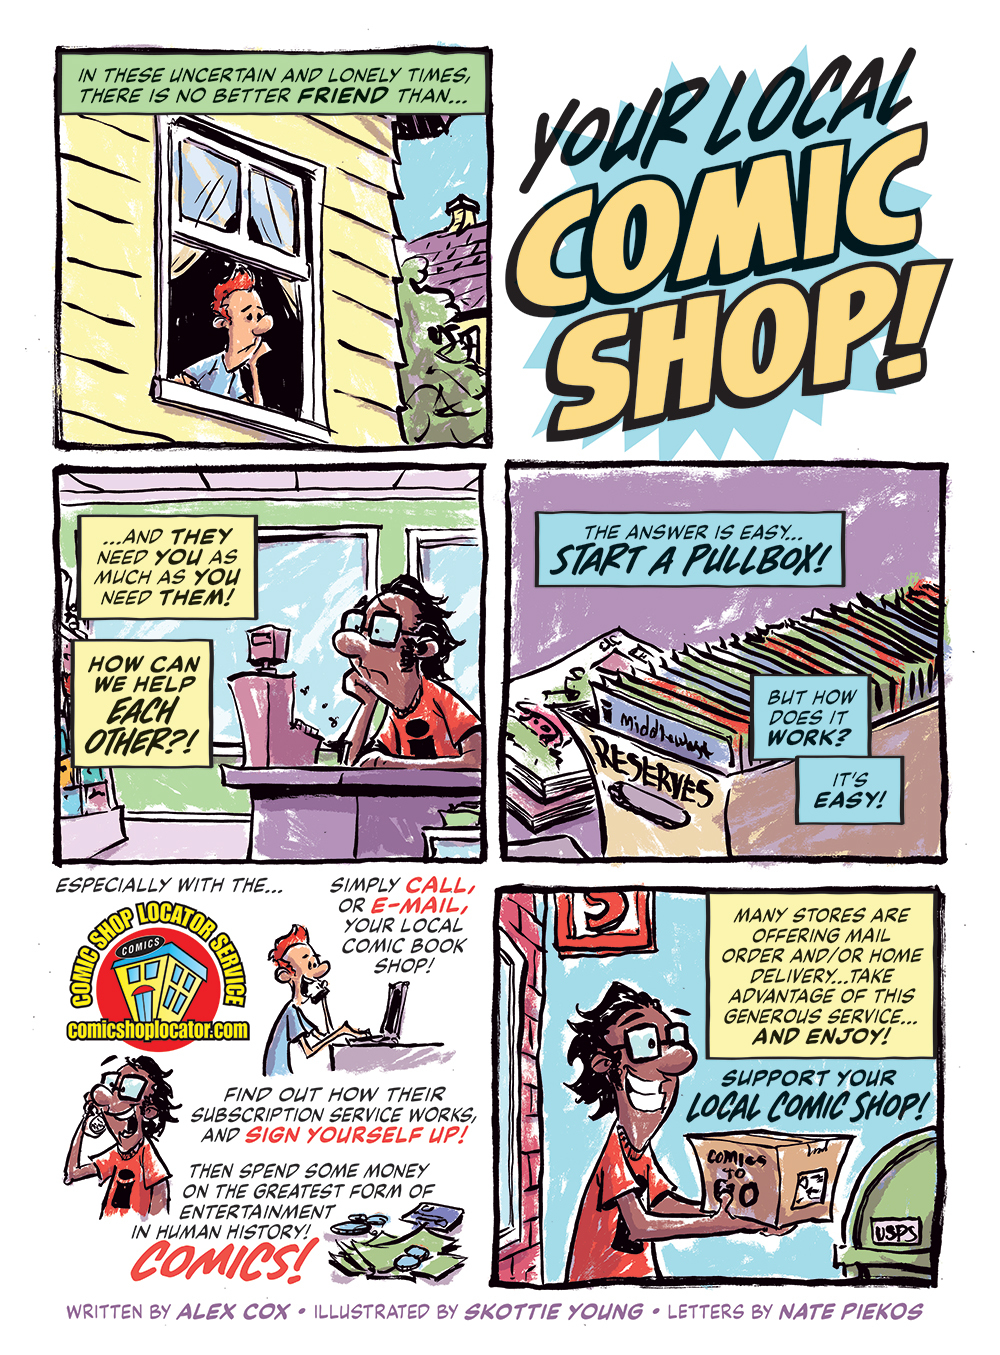 Your-local-comic-shop.jpg